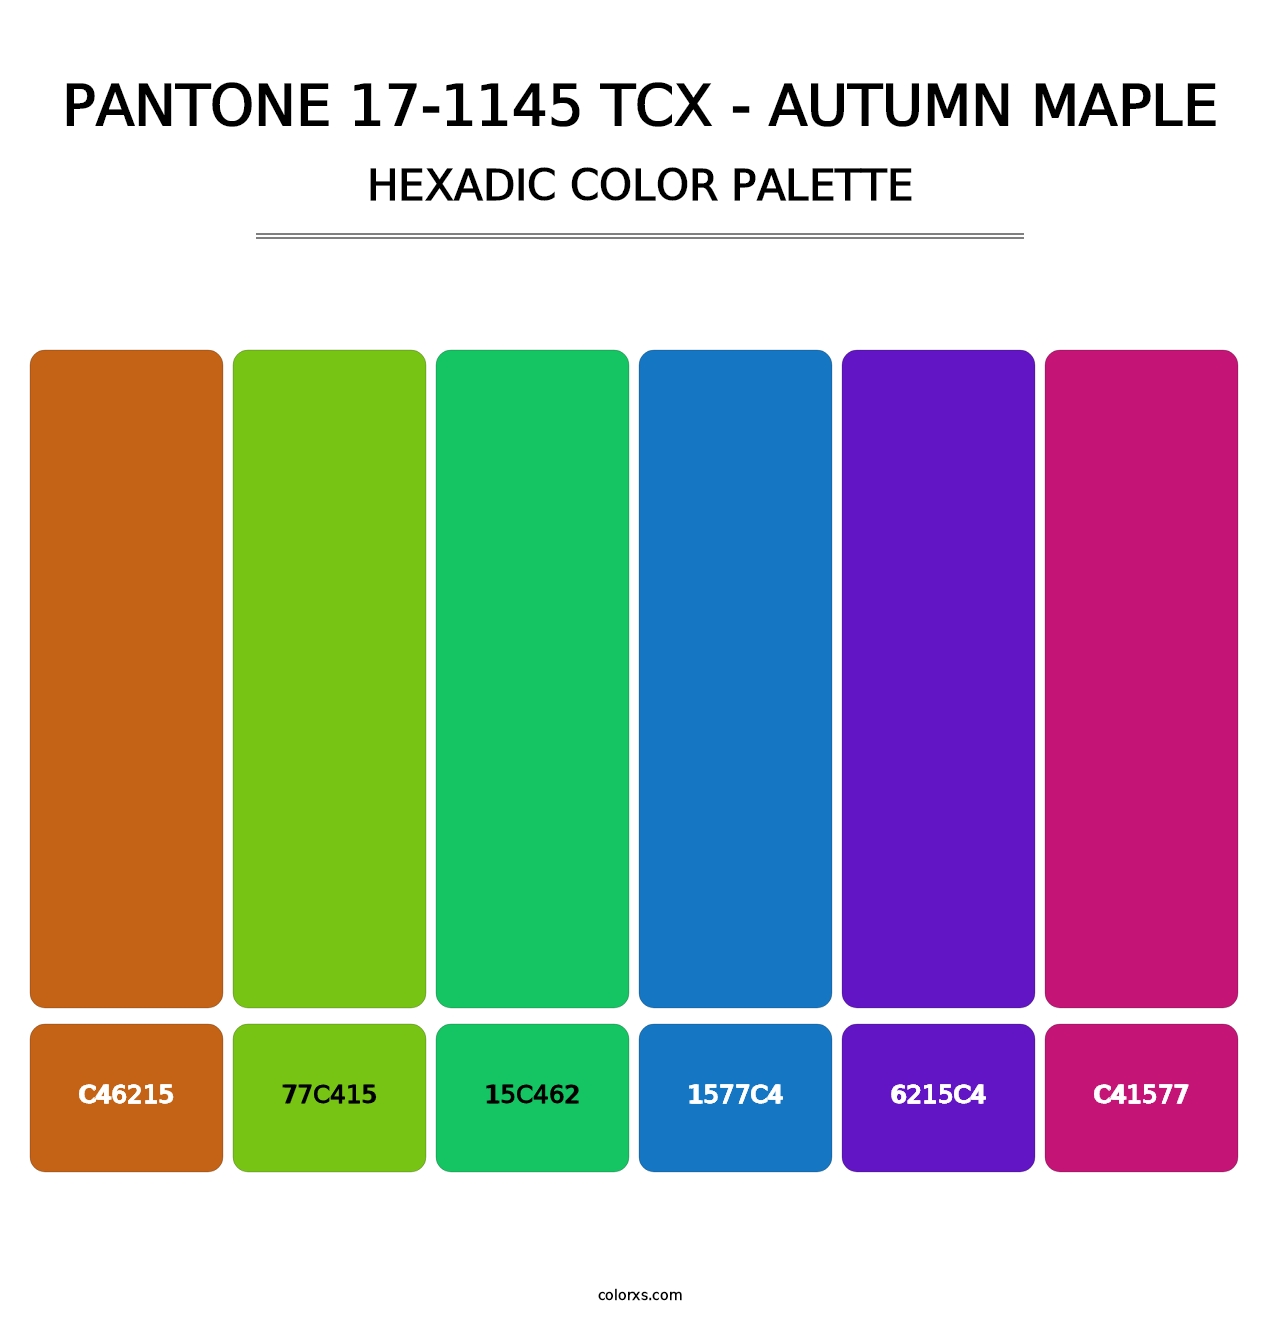 PANTONE 17-1145 TCX - Autumn Maple - Hexadic Color Palette